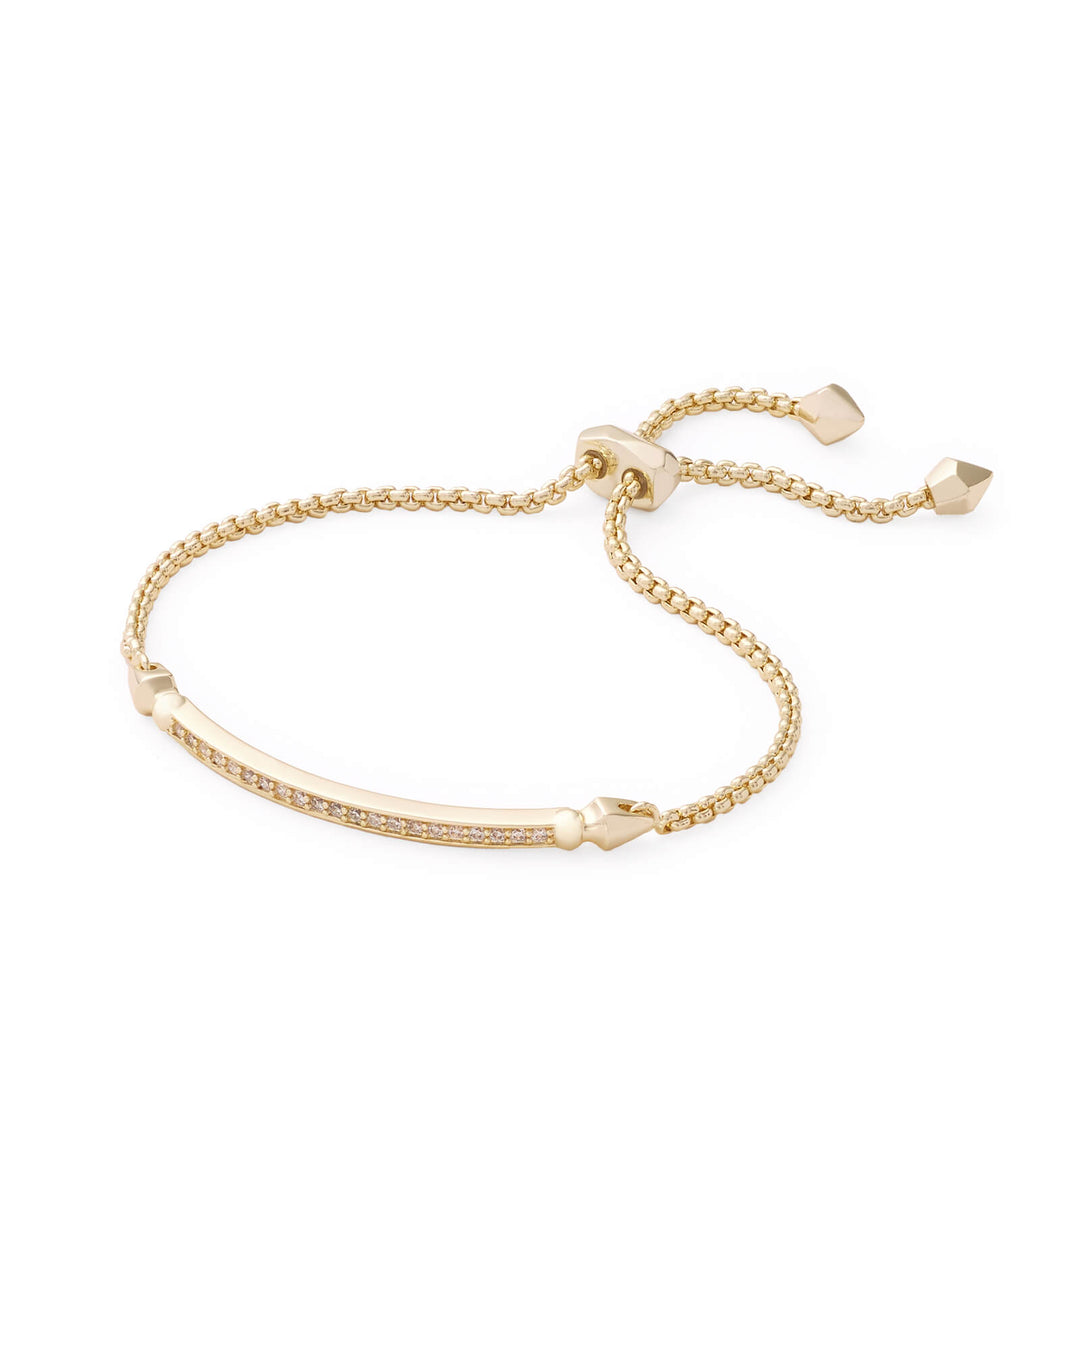 Ott Adjustable Chain Bracelet in Gold - Bliss Boutique 